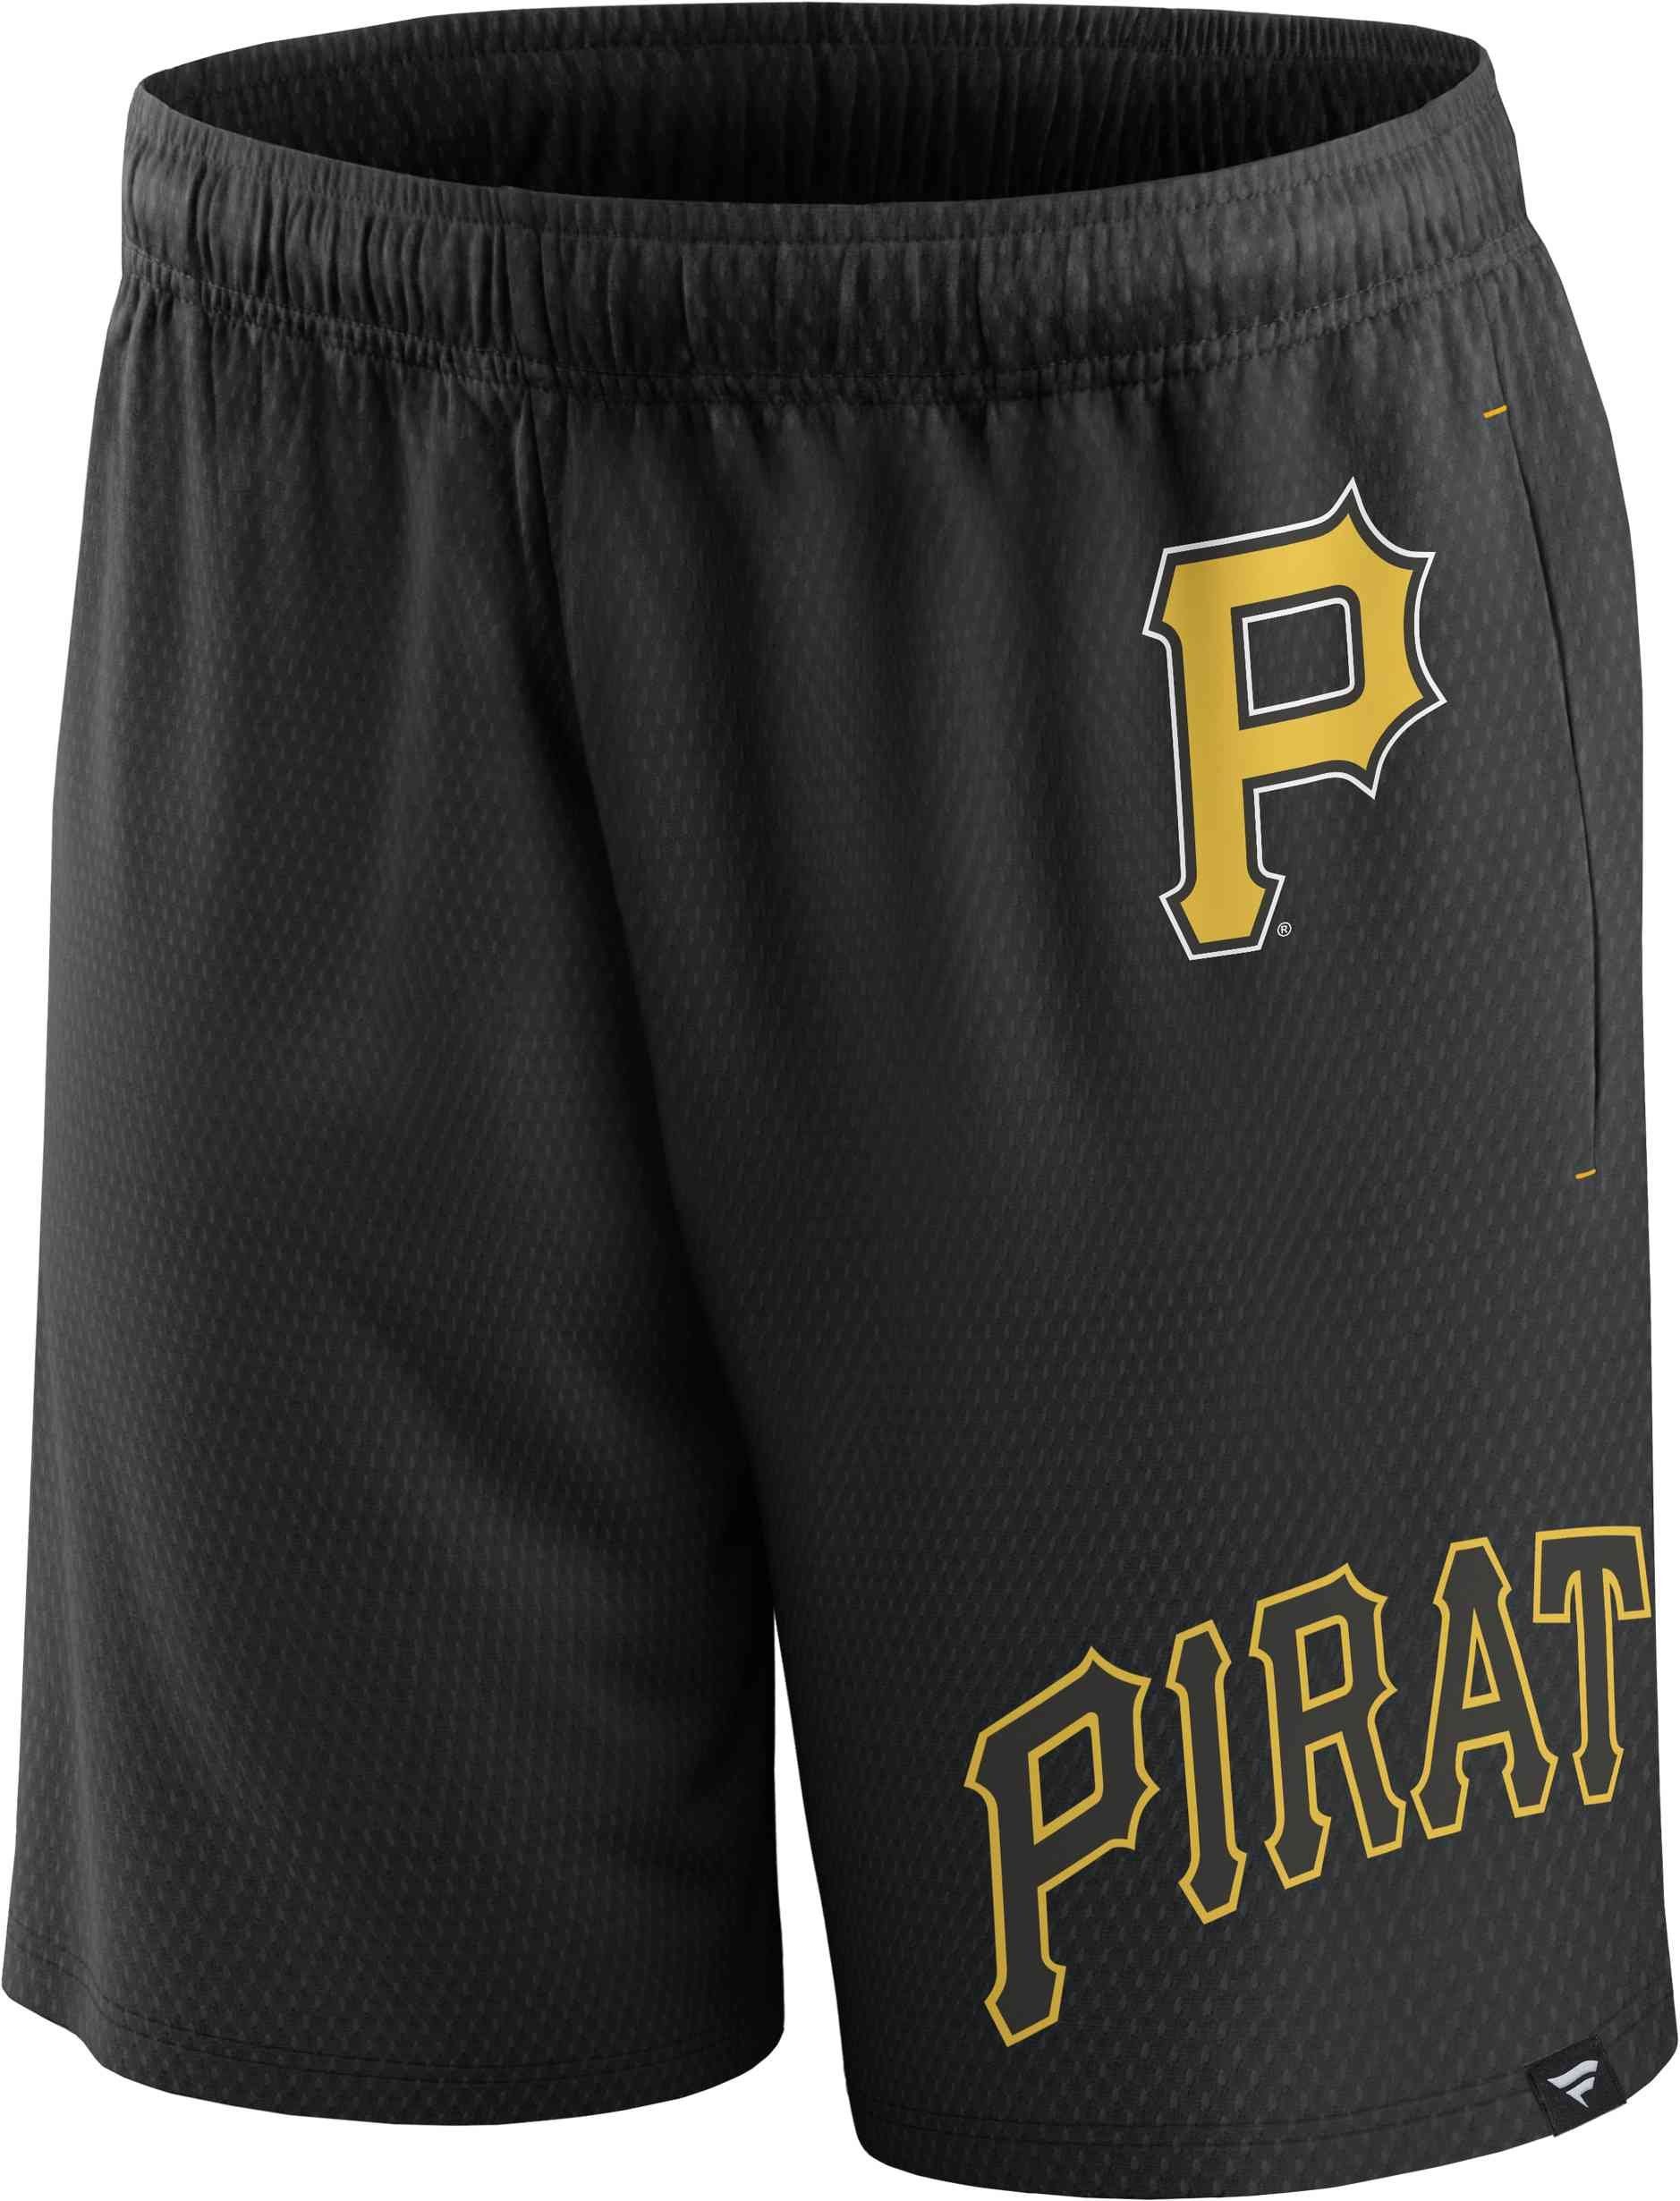 Fanatics Shorts MLB Pittsburgh Pirates Mesh